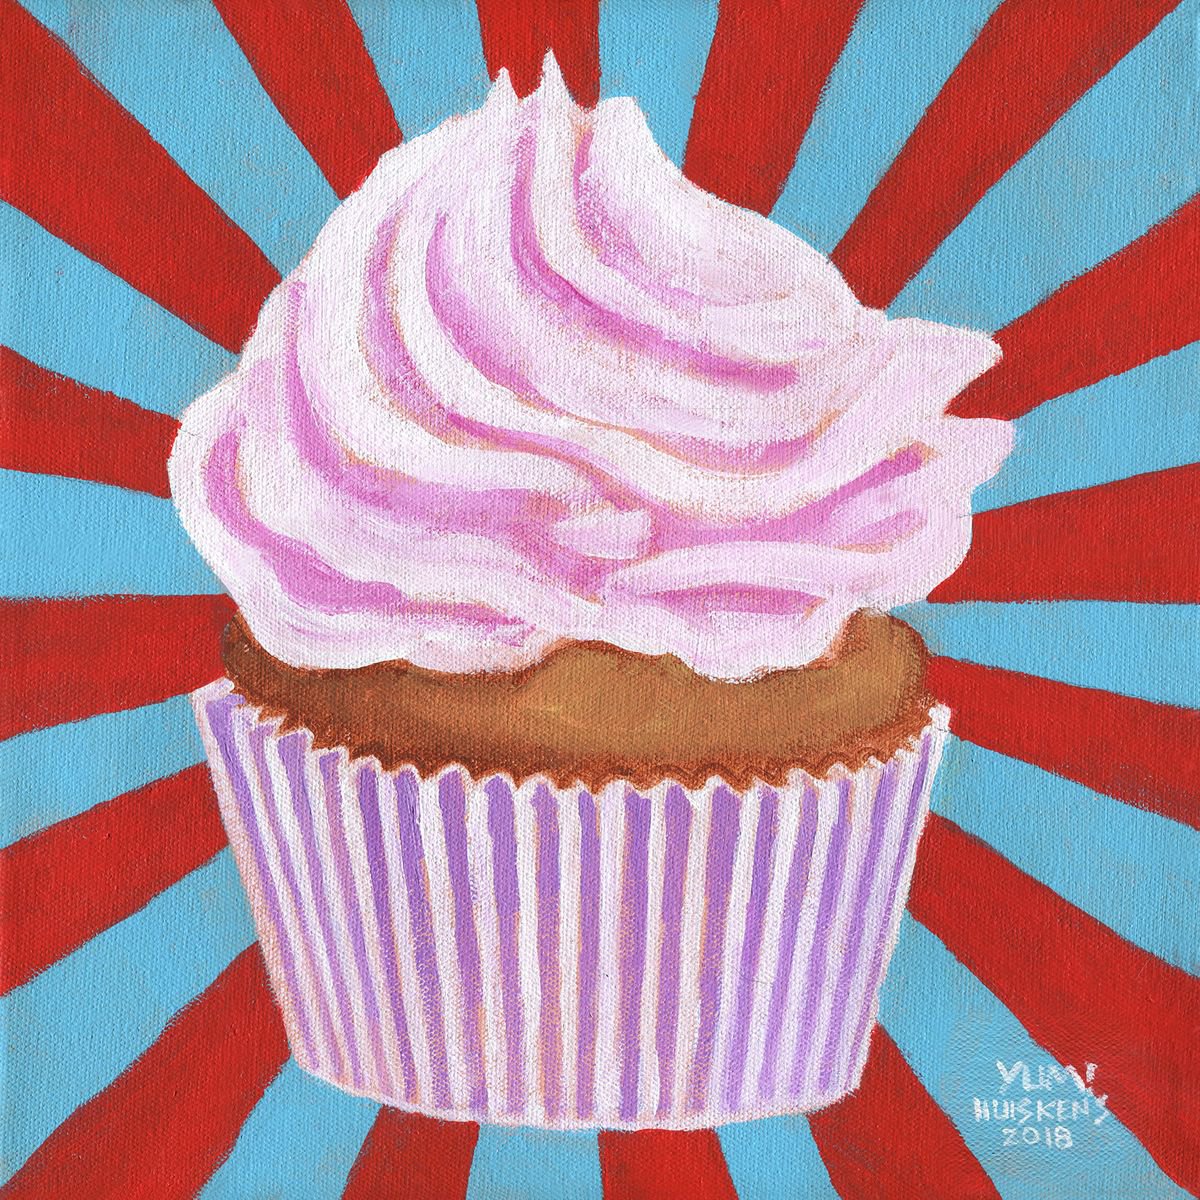 Cupcake No. 1 by Randal Huiskens